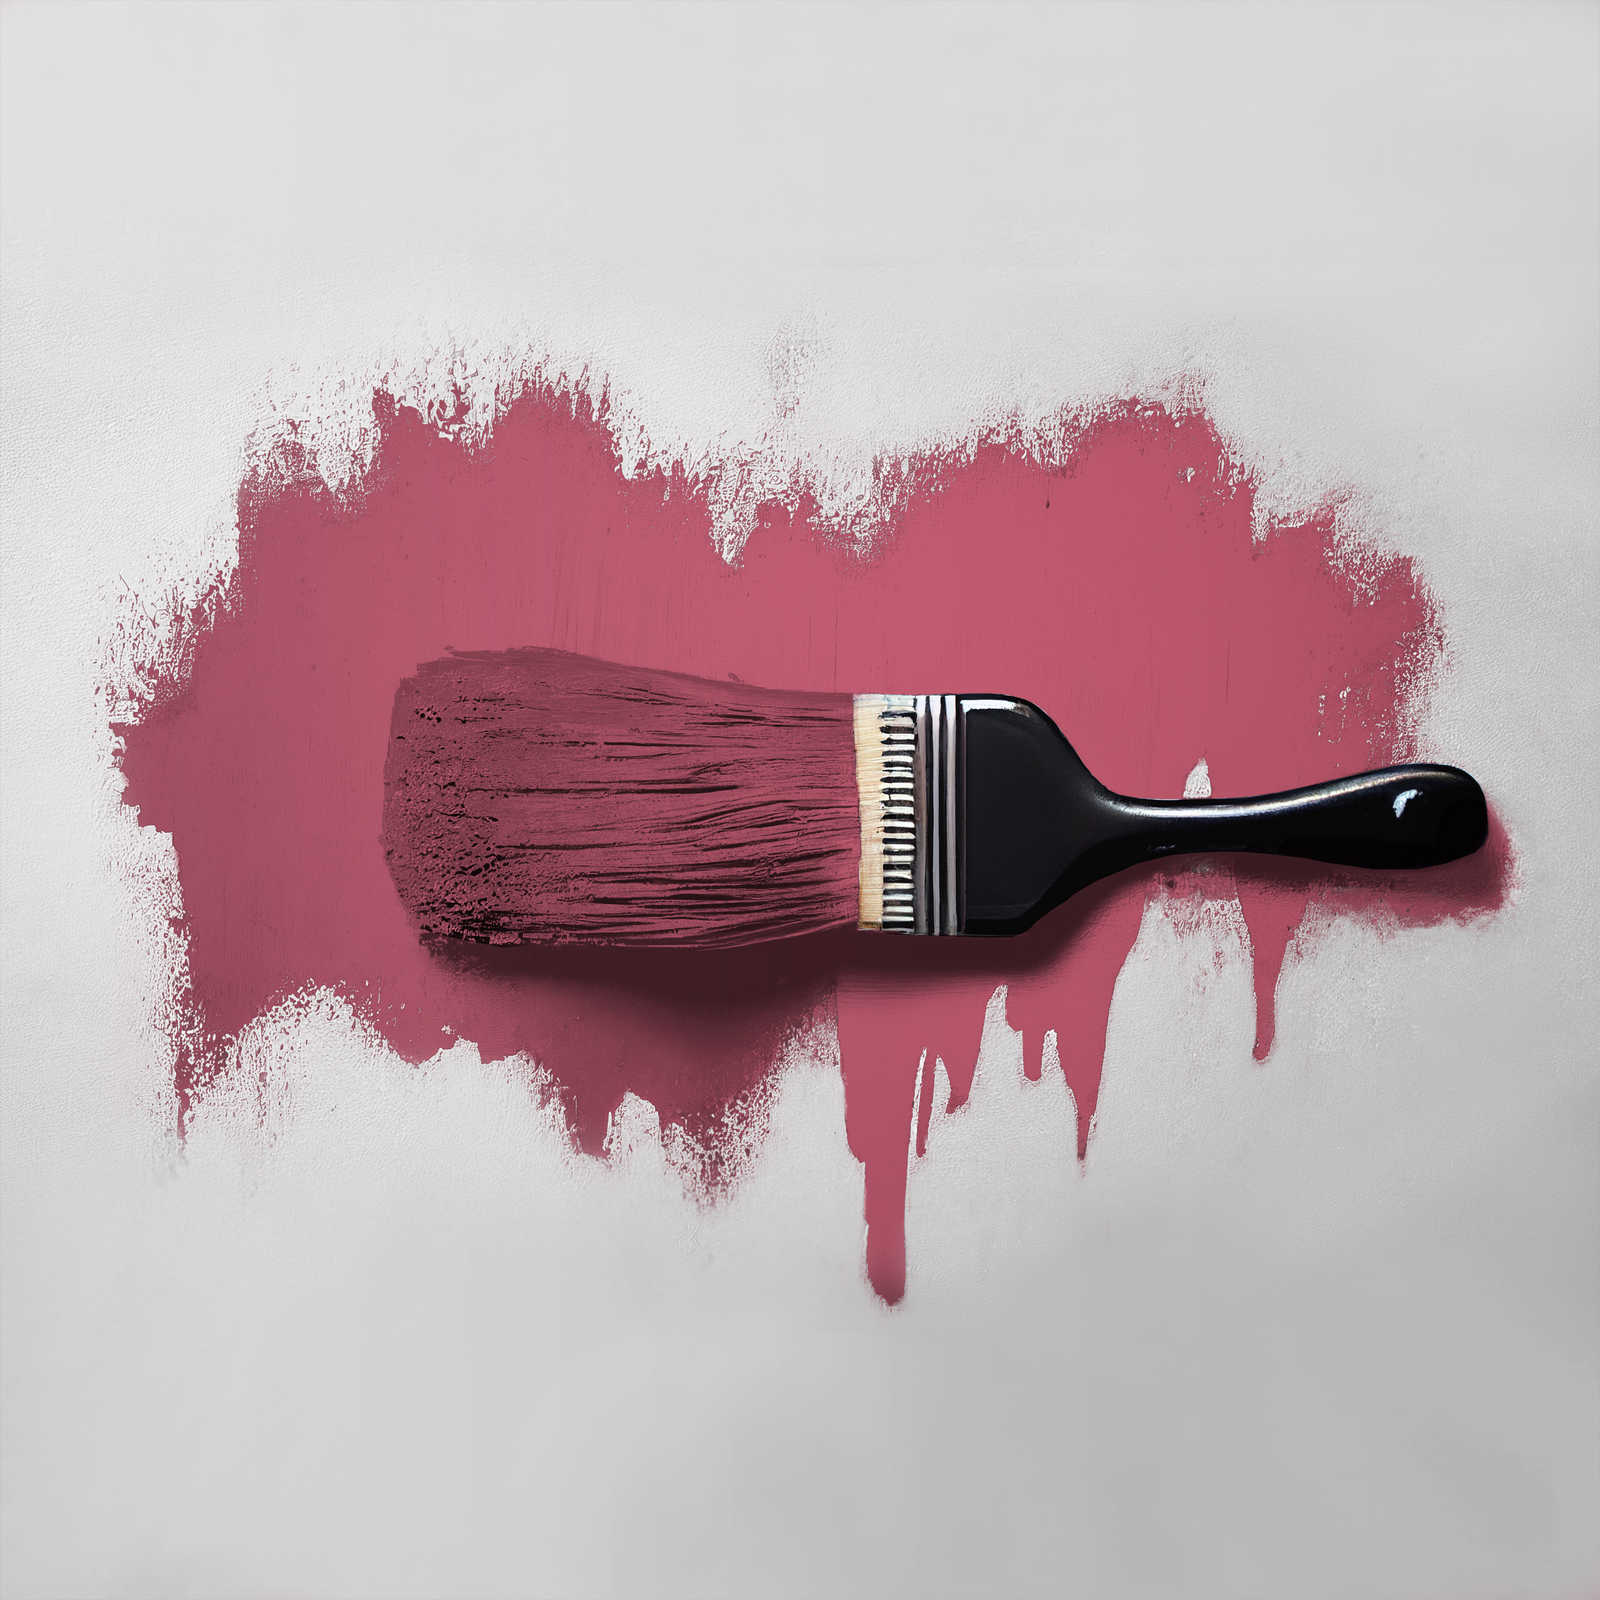             Wandfarbe in intensivem Dunkelrosa »Rosy Raspberry« TCK7011 – 5 Liter
        